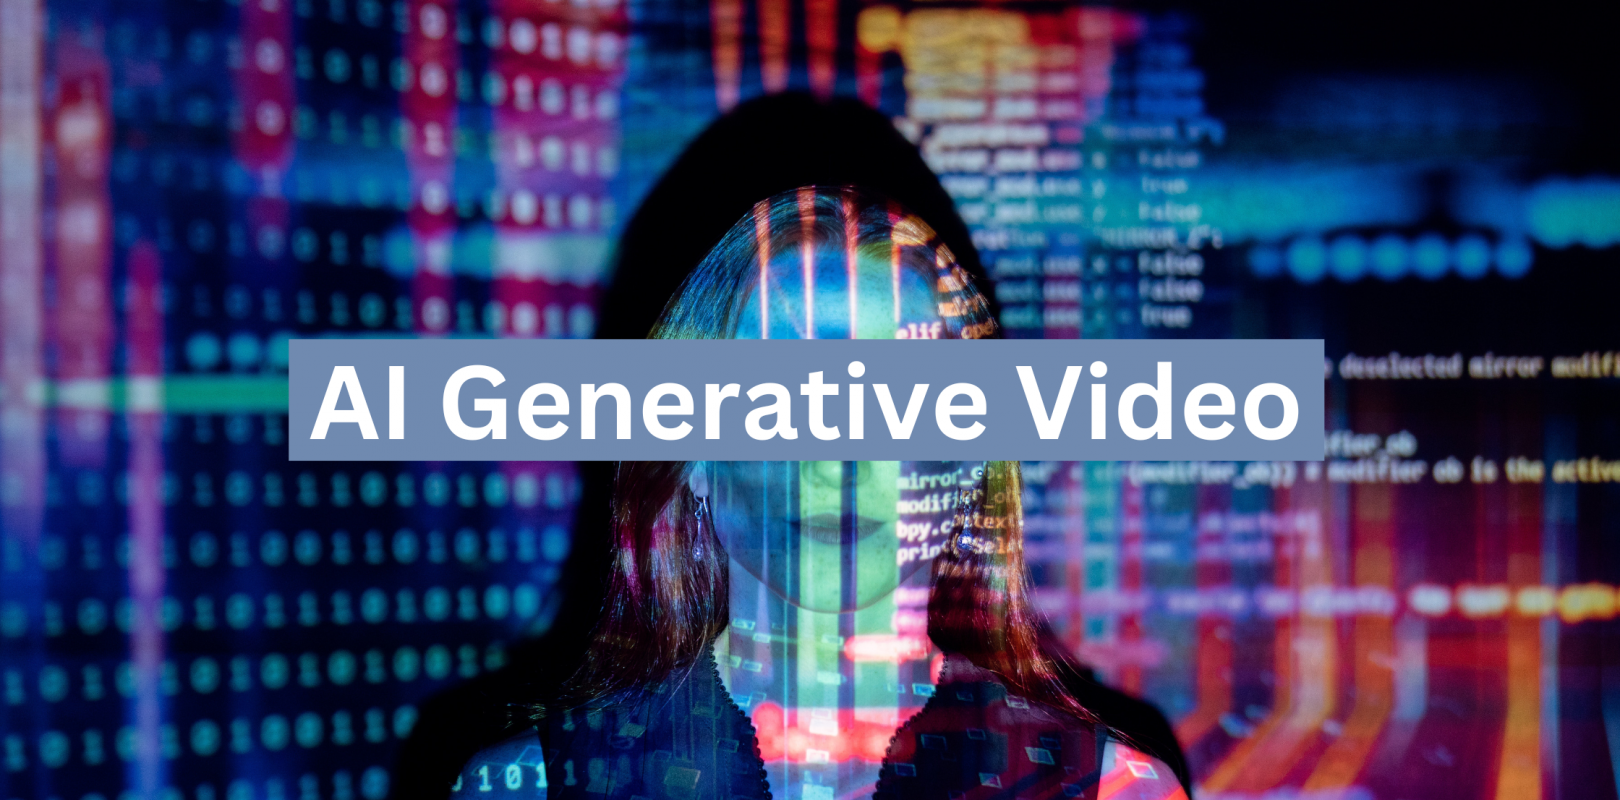 AI Video Generator